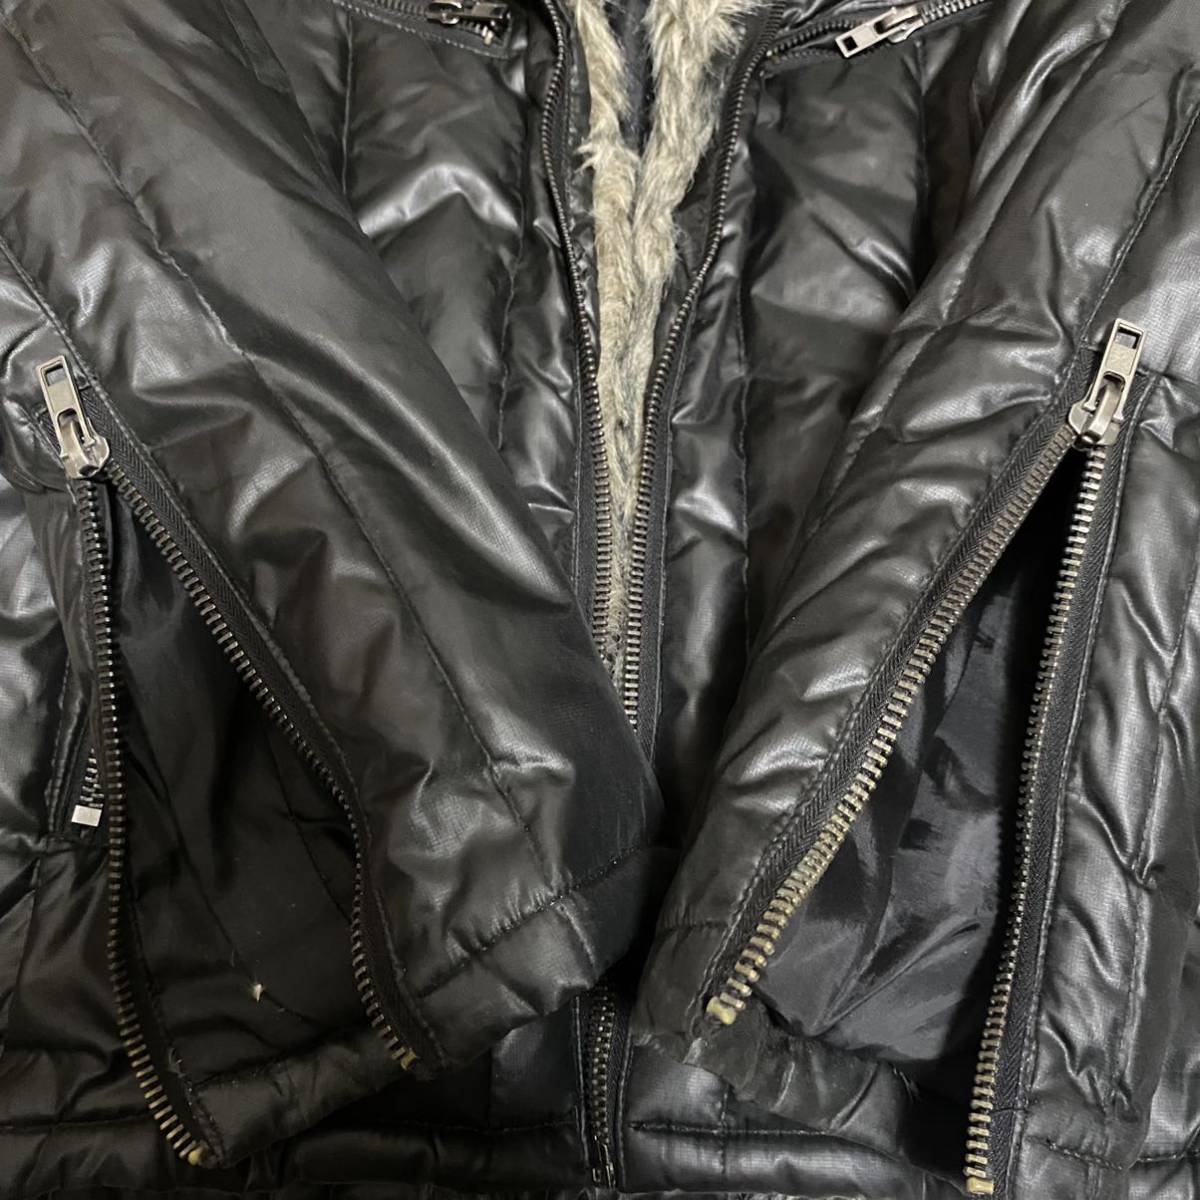 00s rare japanese label lgb bono design fur leather jacket Archive jacket ifsixwasnine share spirit 90s vintage goa EKAM y2k_画像4